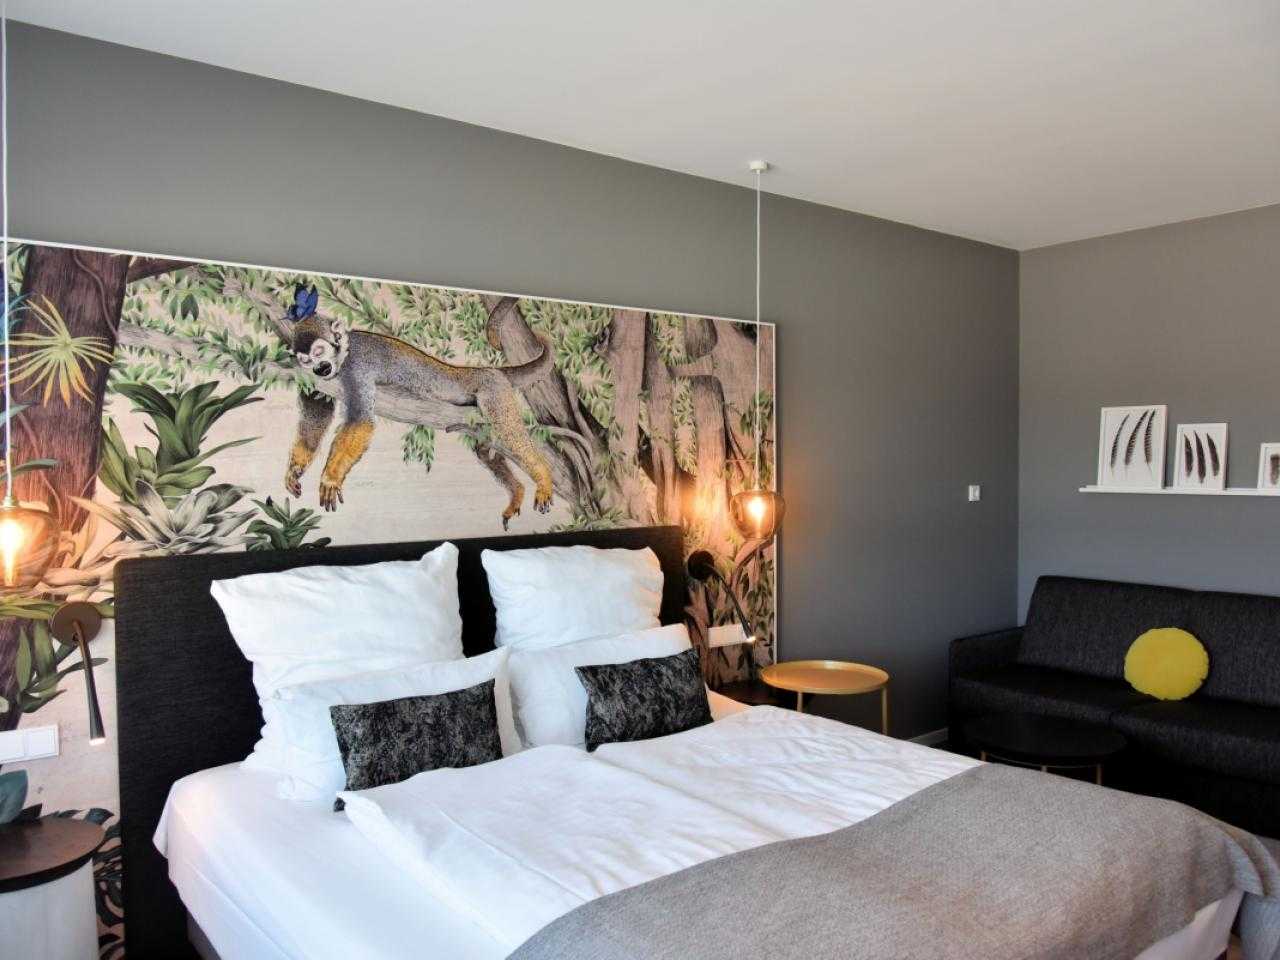 Interieur hotelkamer met jungle behang achter bed, Ninety Nine hotel